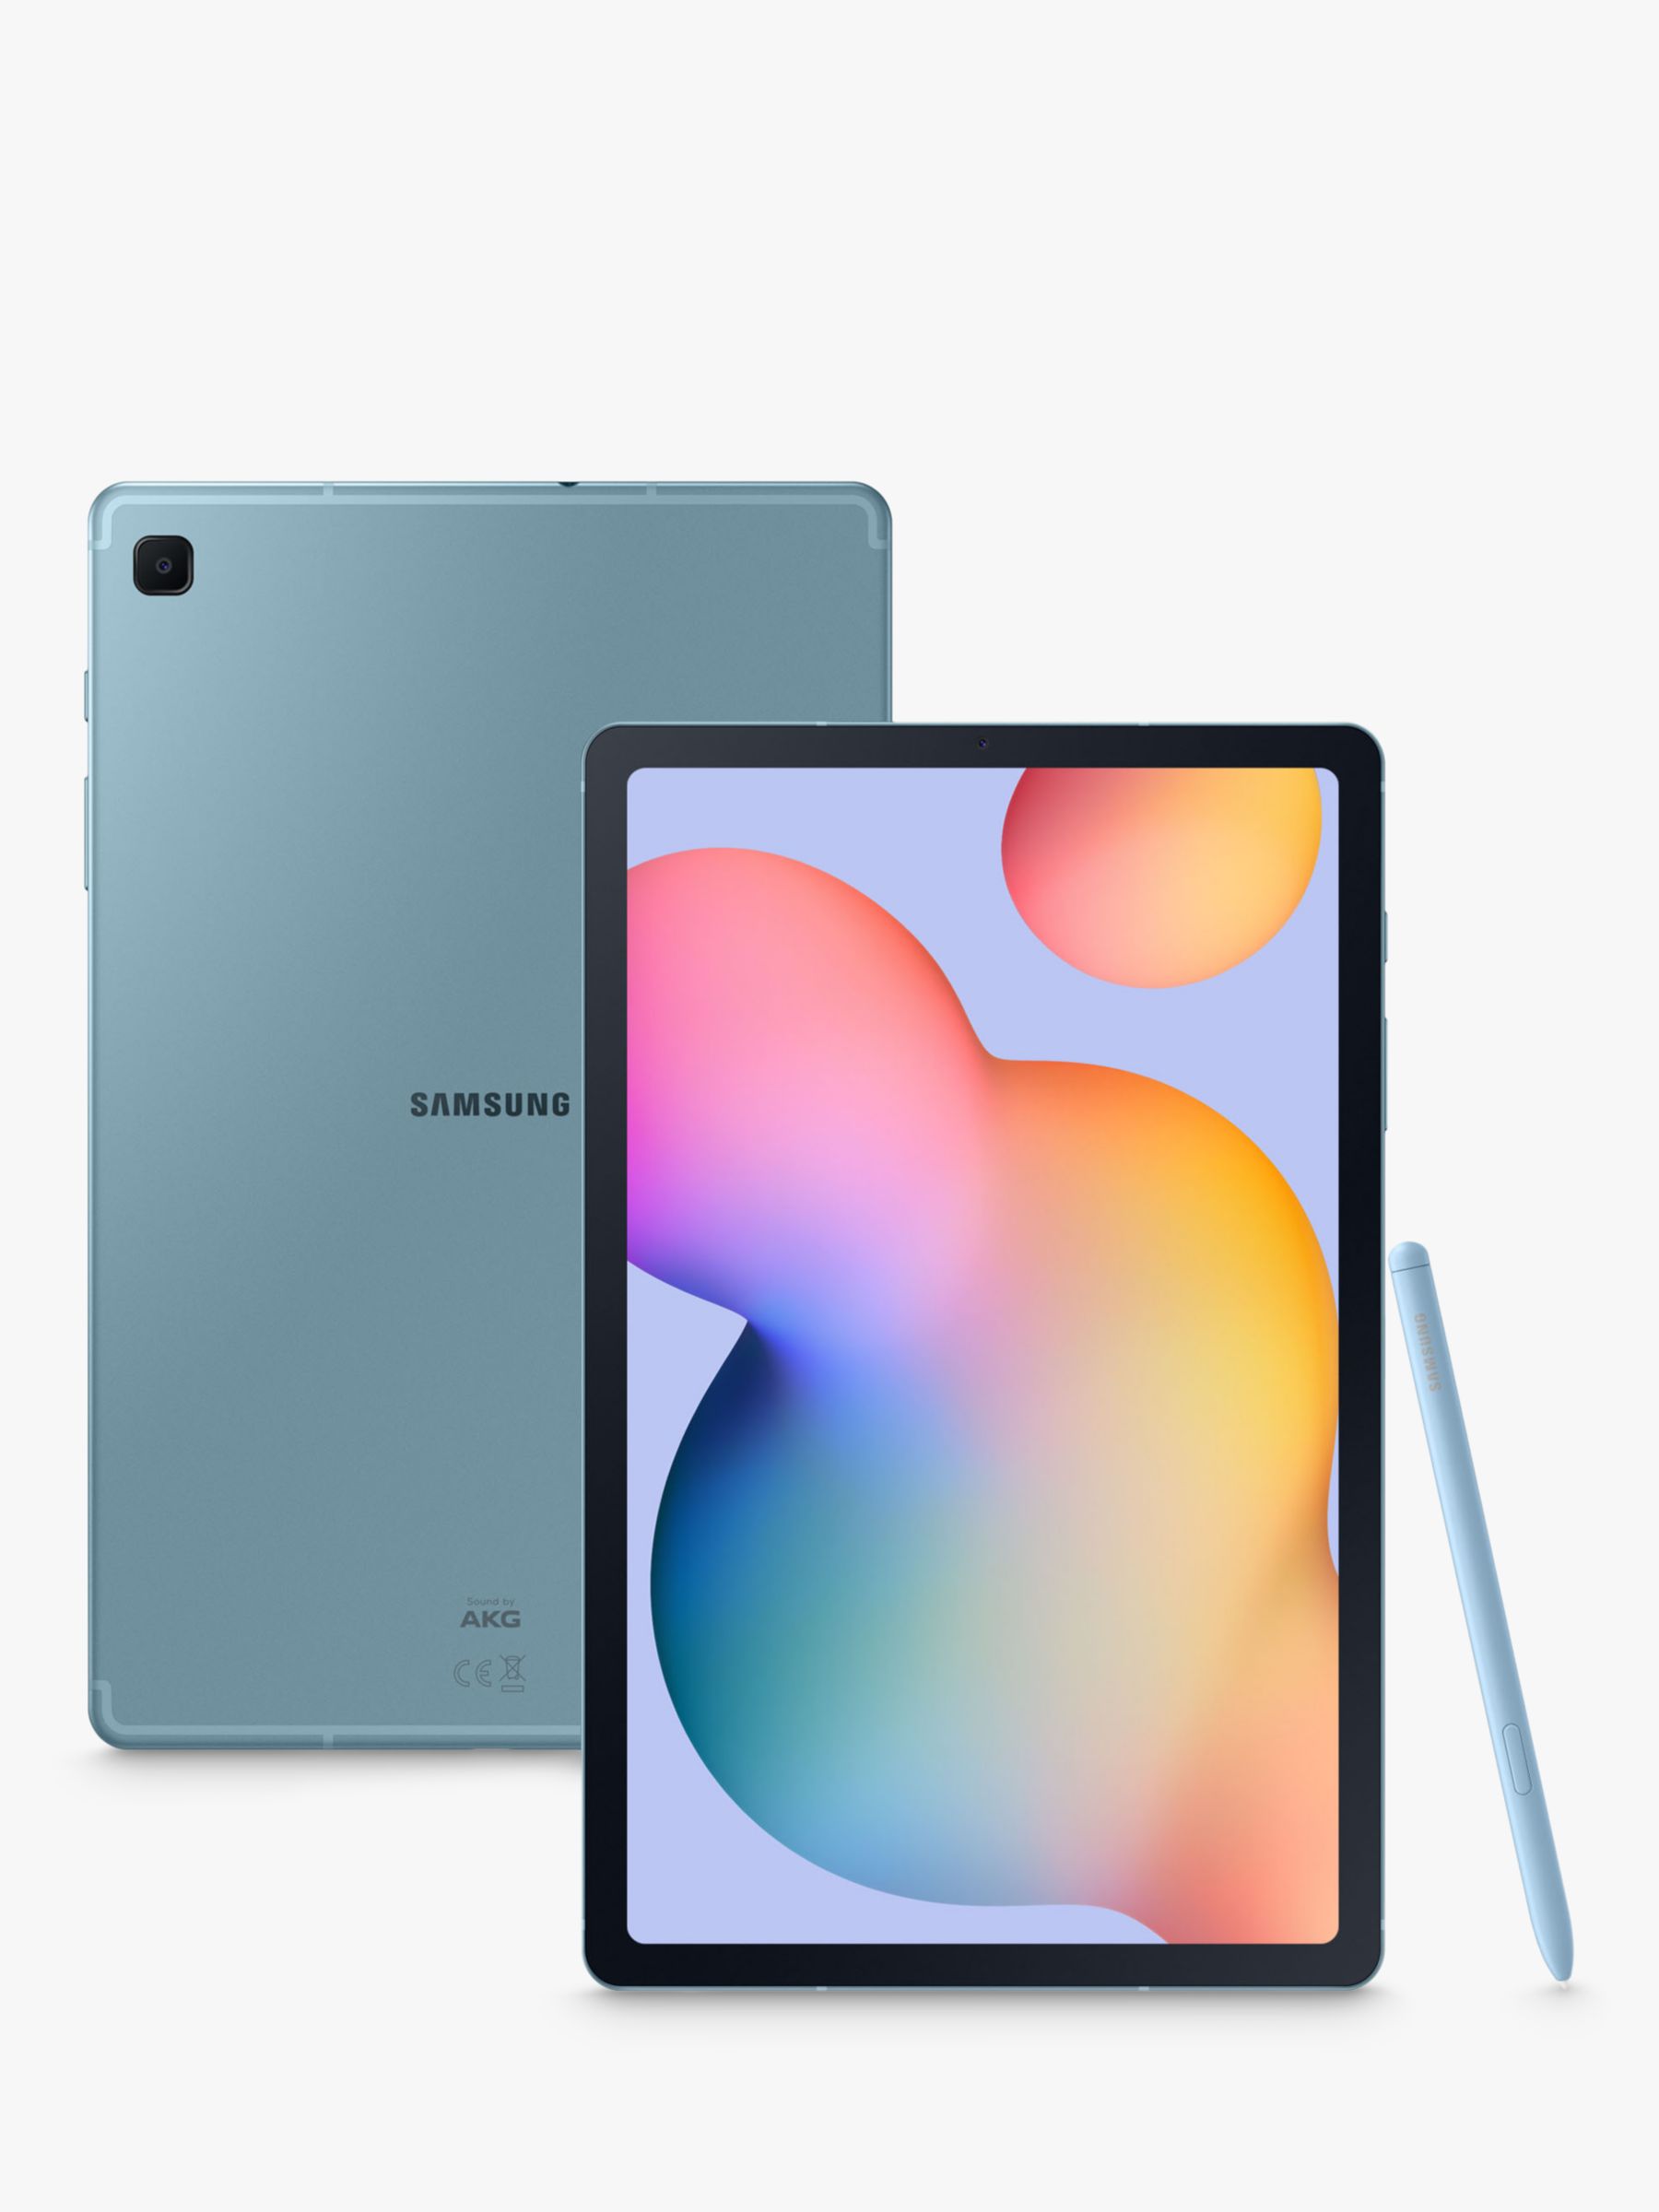 View All Tablets - Galaxy Tab S6